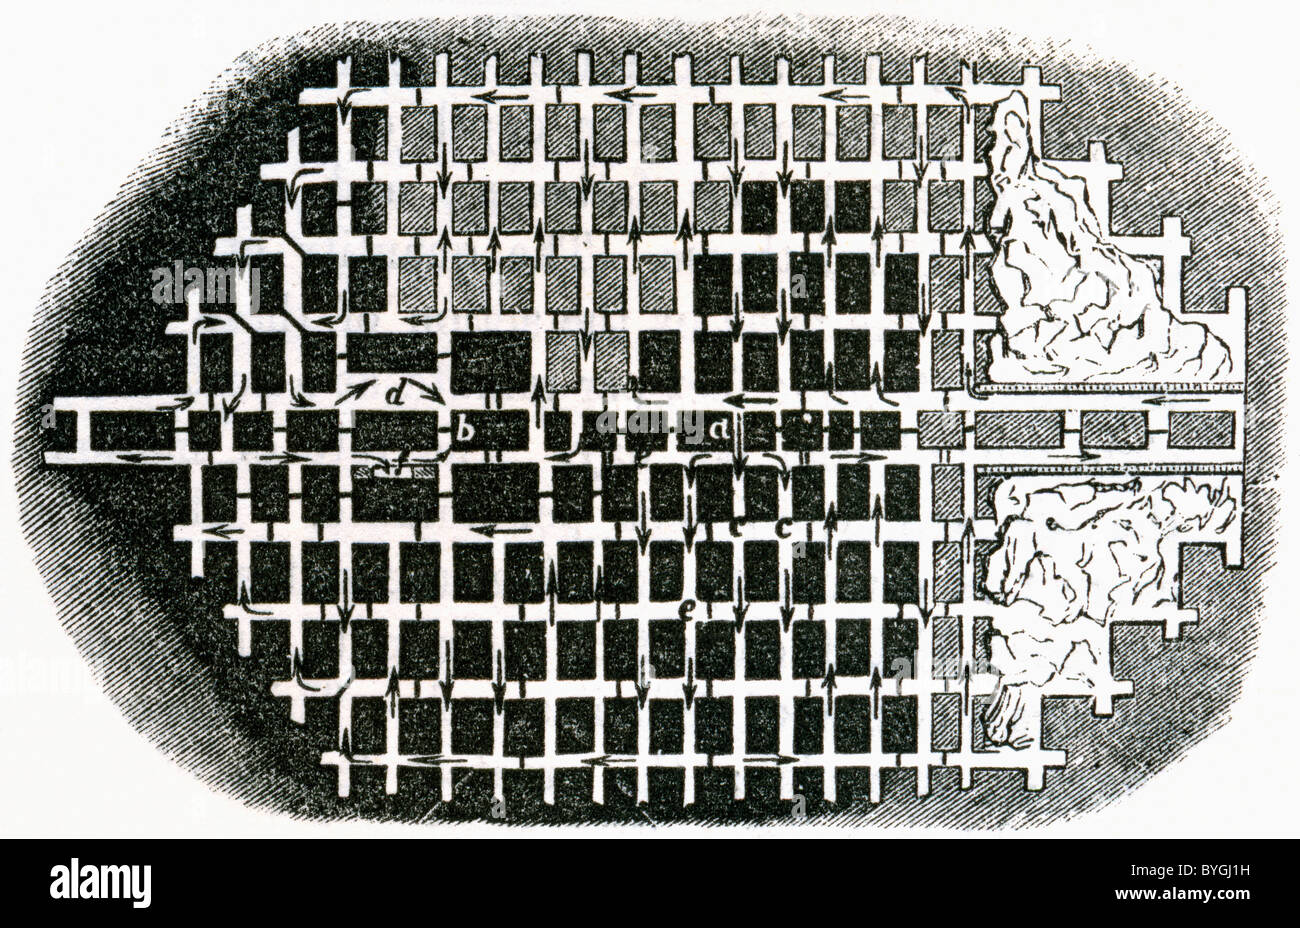 Plan der Zeche im 19. Jahrhundert Stockfotografie - Alamy